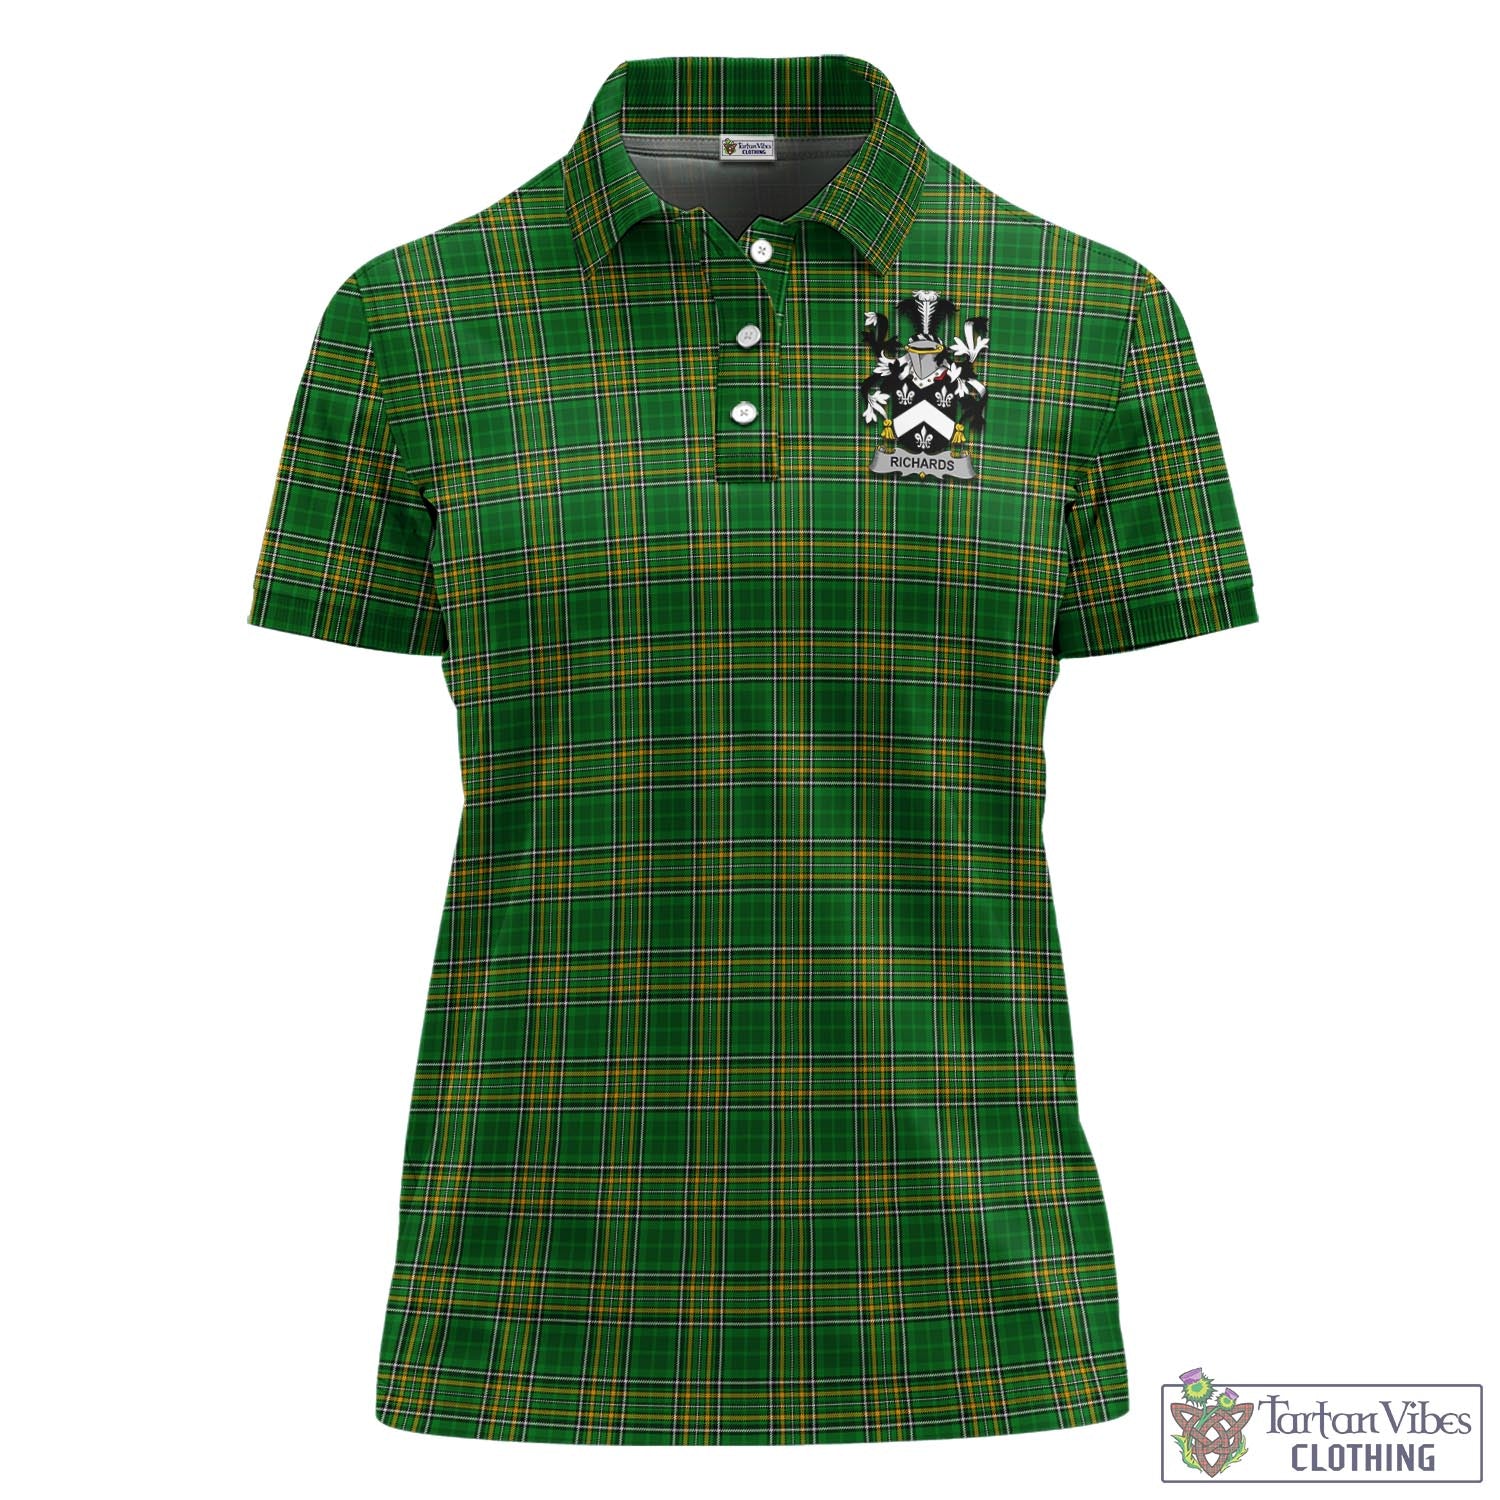 Tartan Vibes Clothing Richards Ireland Clan Tartan Women's Polo Shirt with Coat of Arms